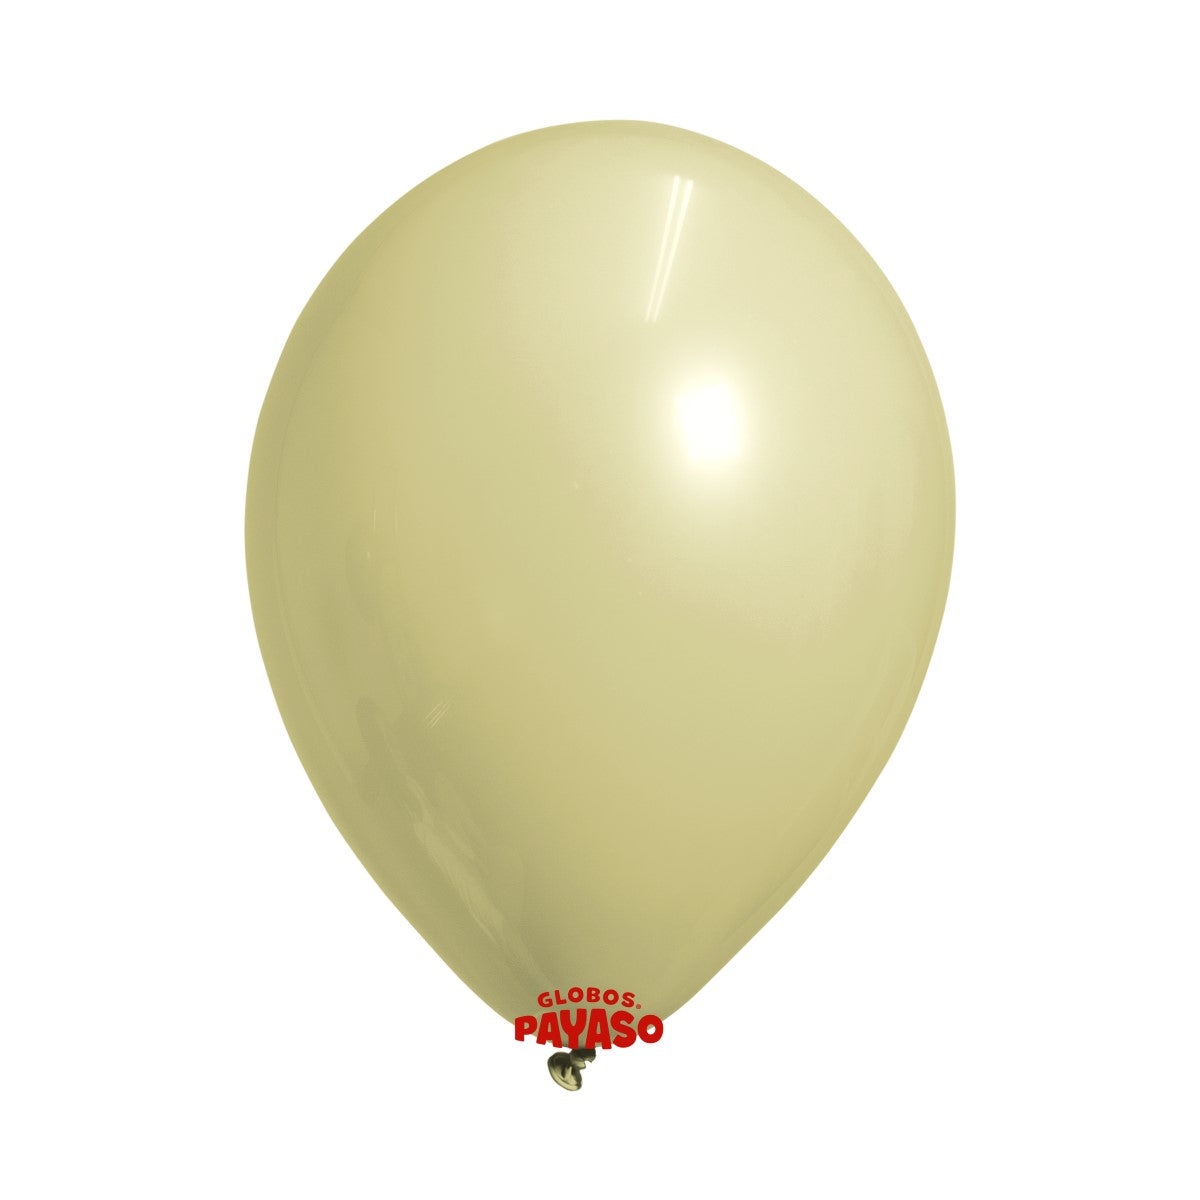 Payaso 24" Standard Ballons